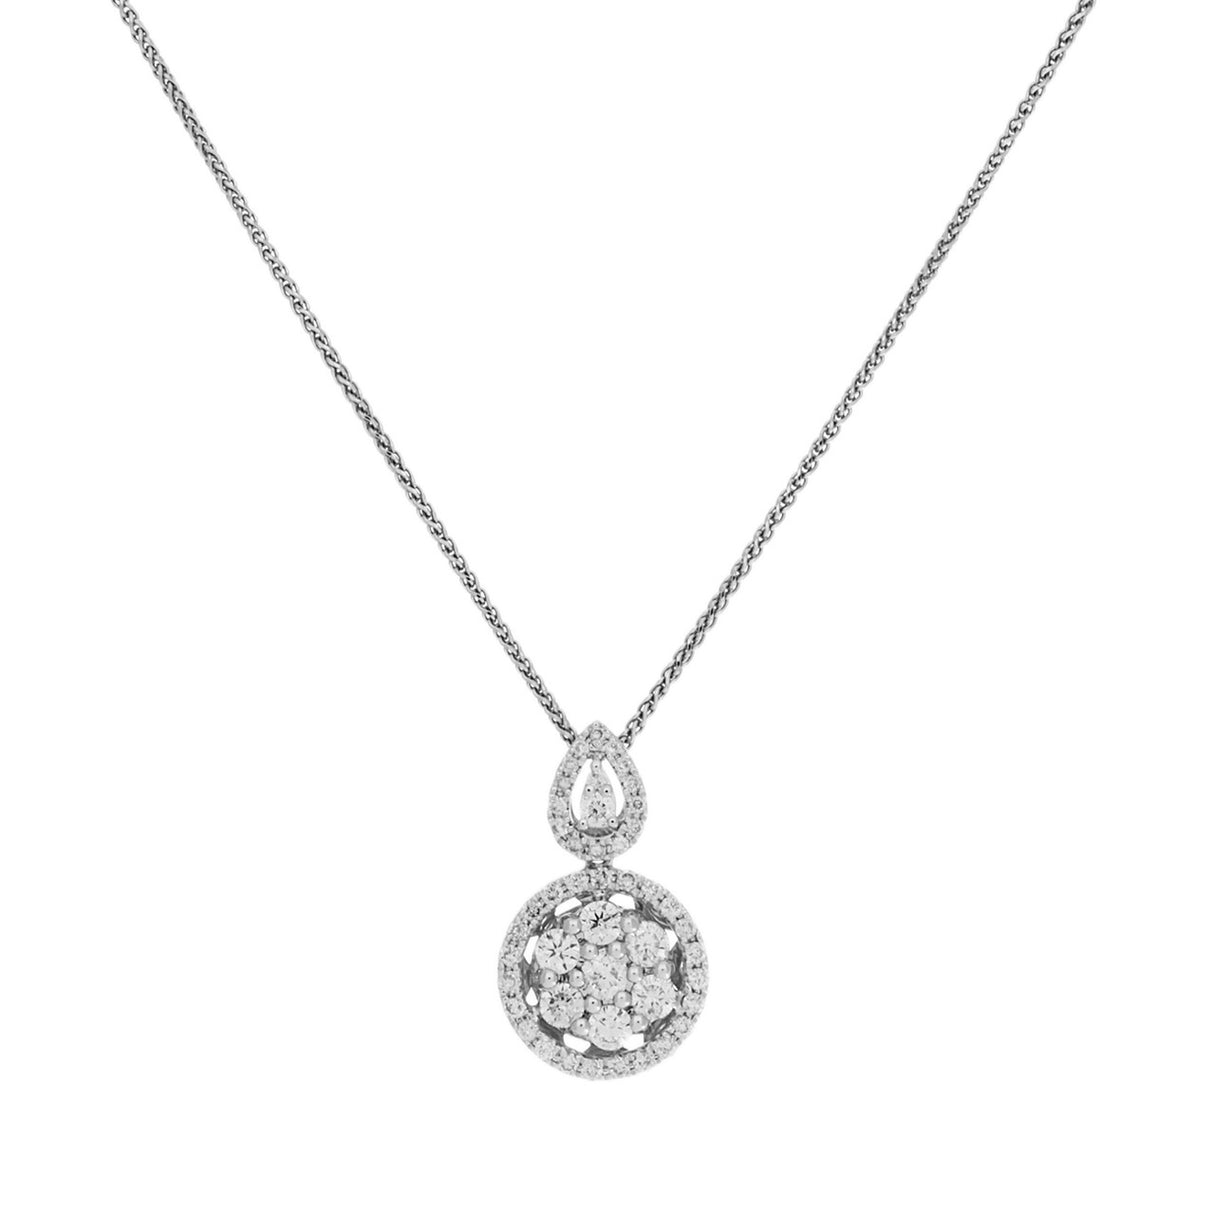 14K White Gold 0.65 Carat Diamond Pendant Necklace